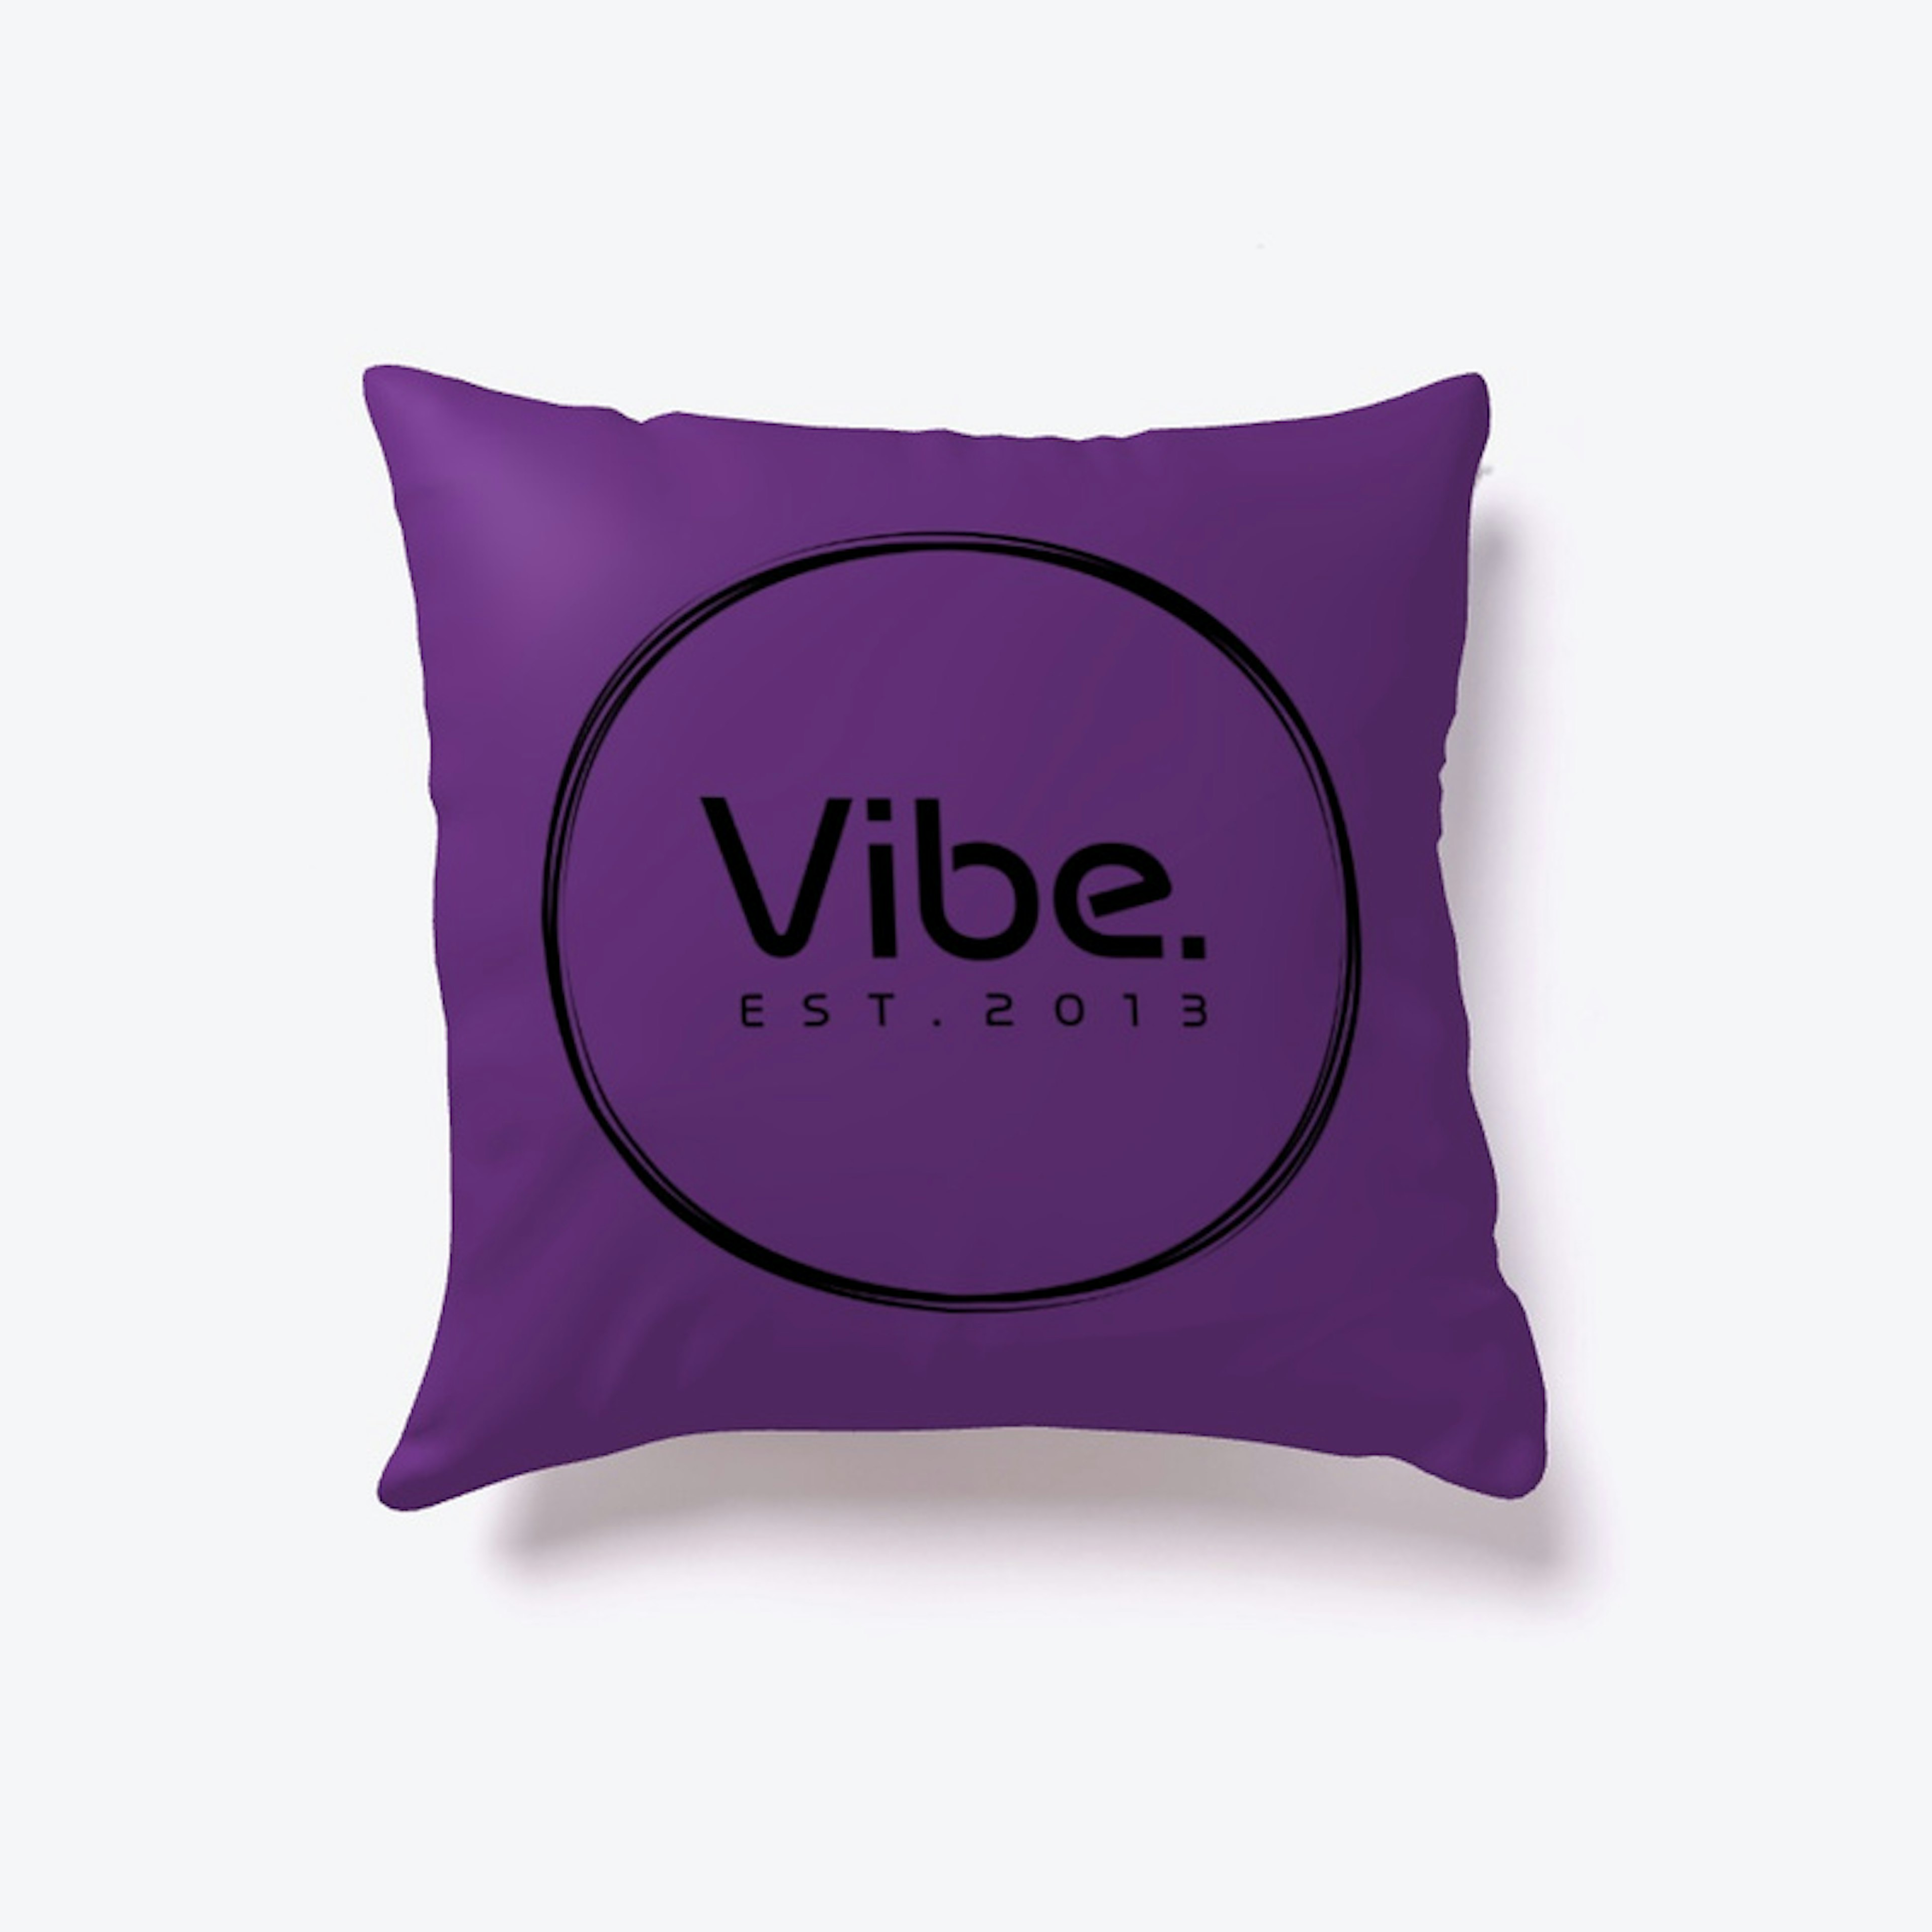 Vibe. Pillow